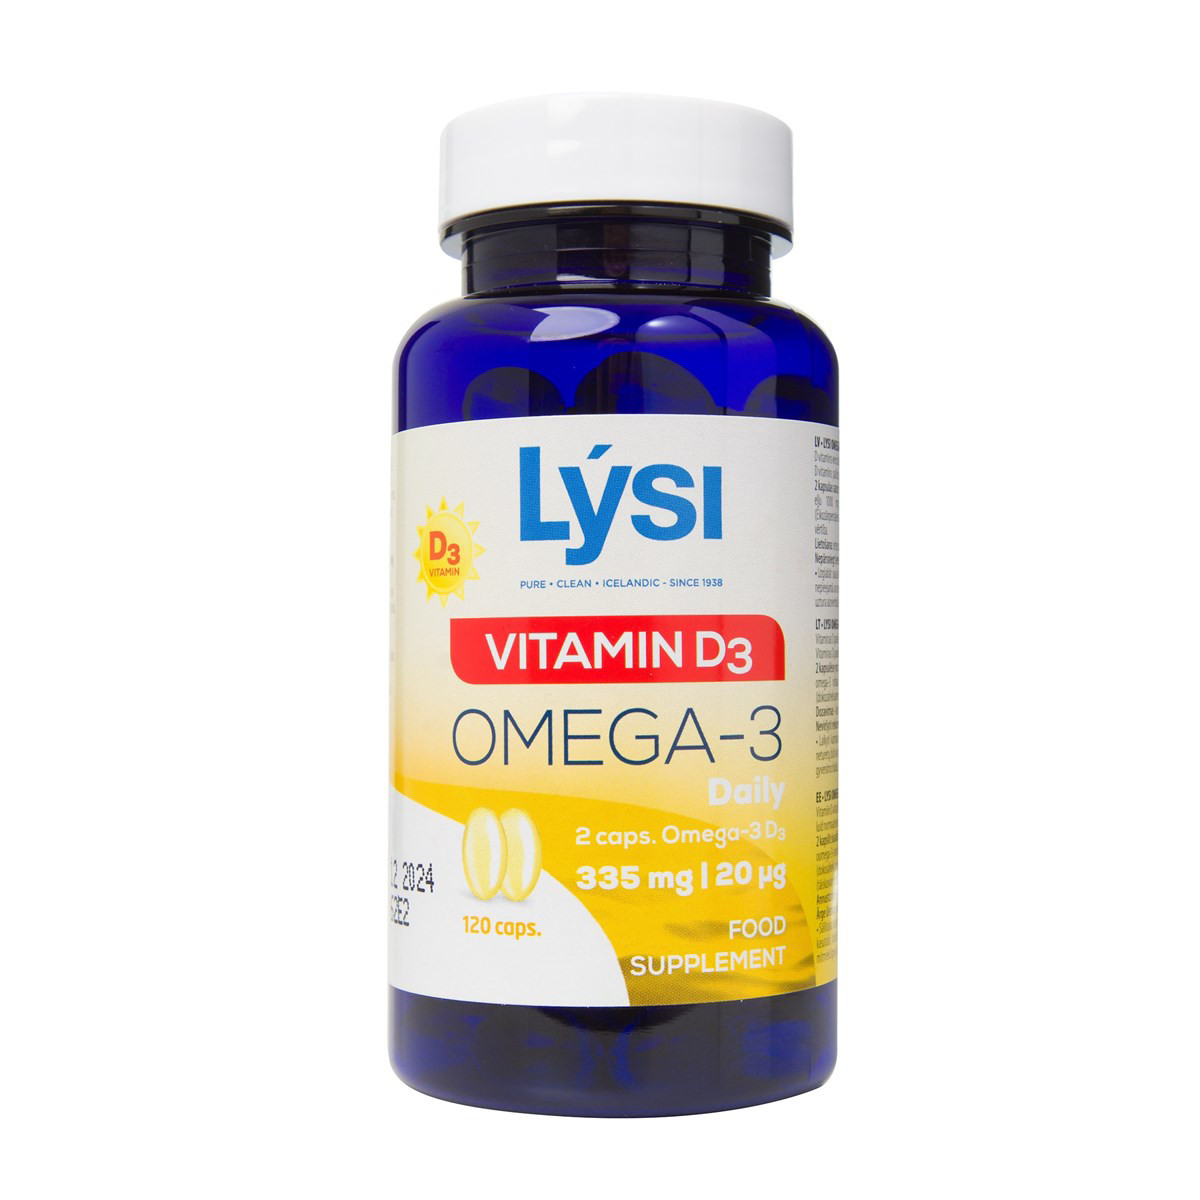 ZeinPharma Omega-3 Gold Brain Edition, 120 capsules